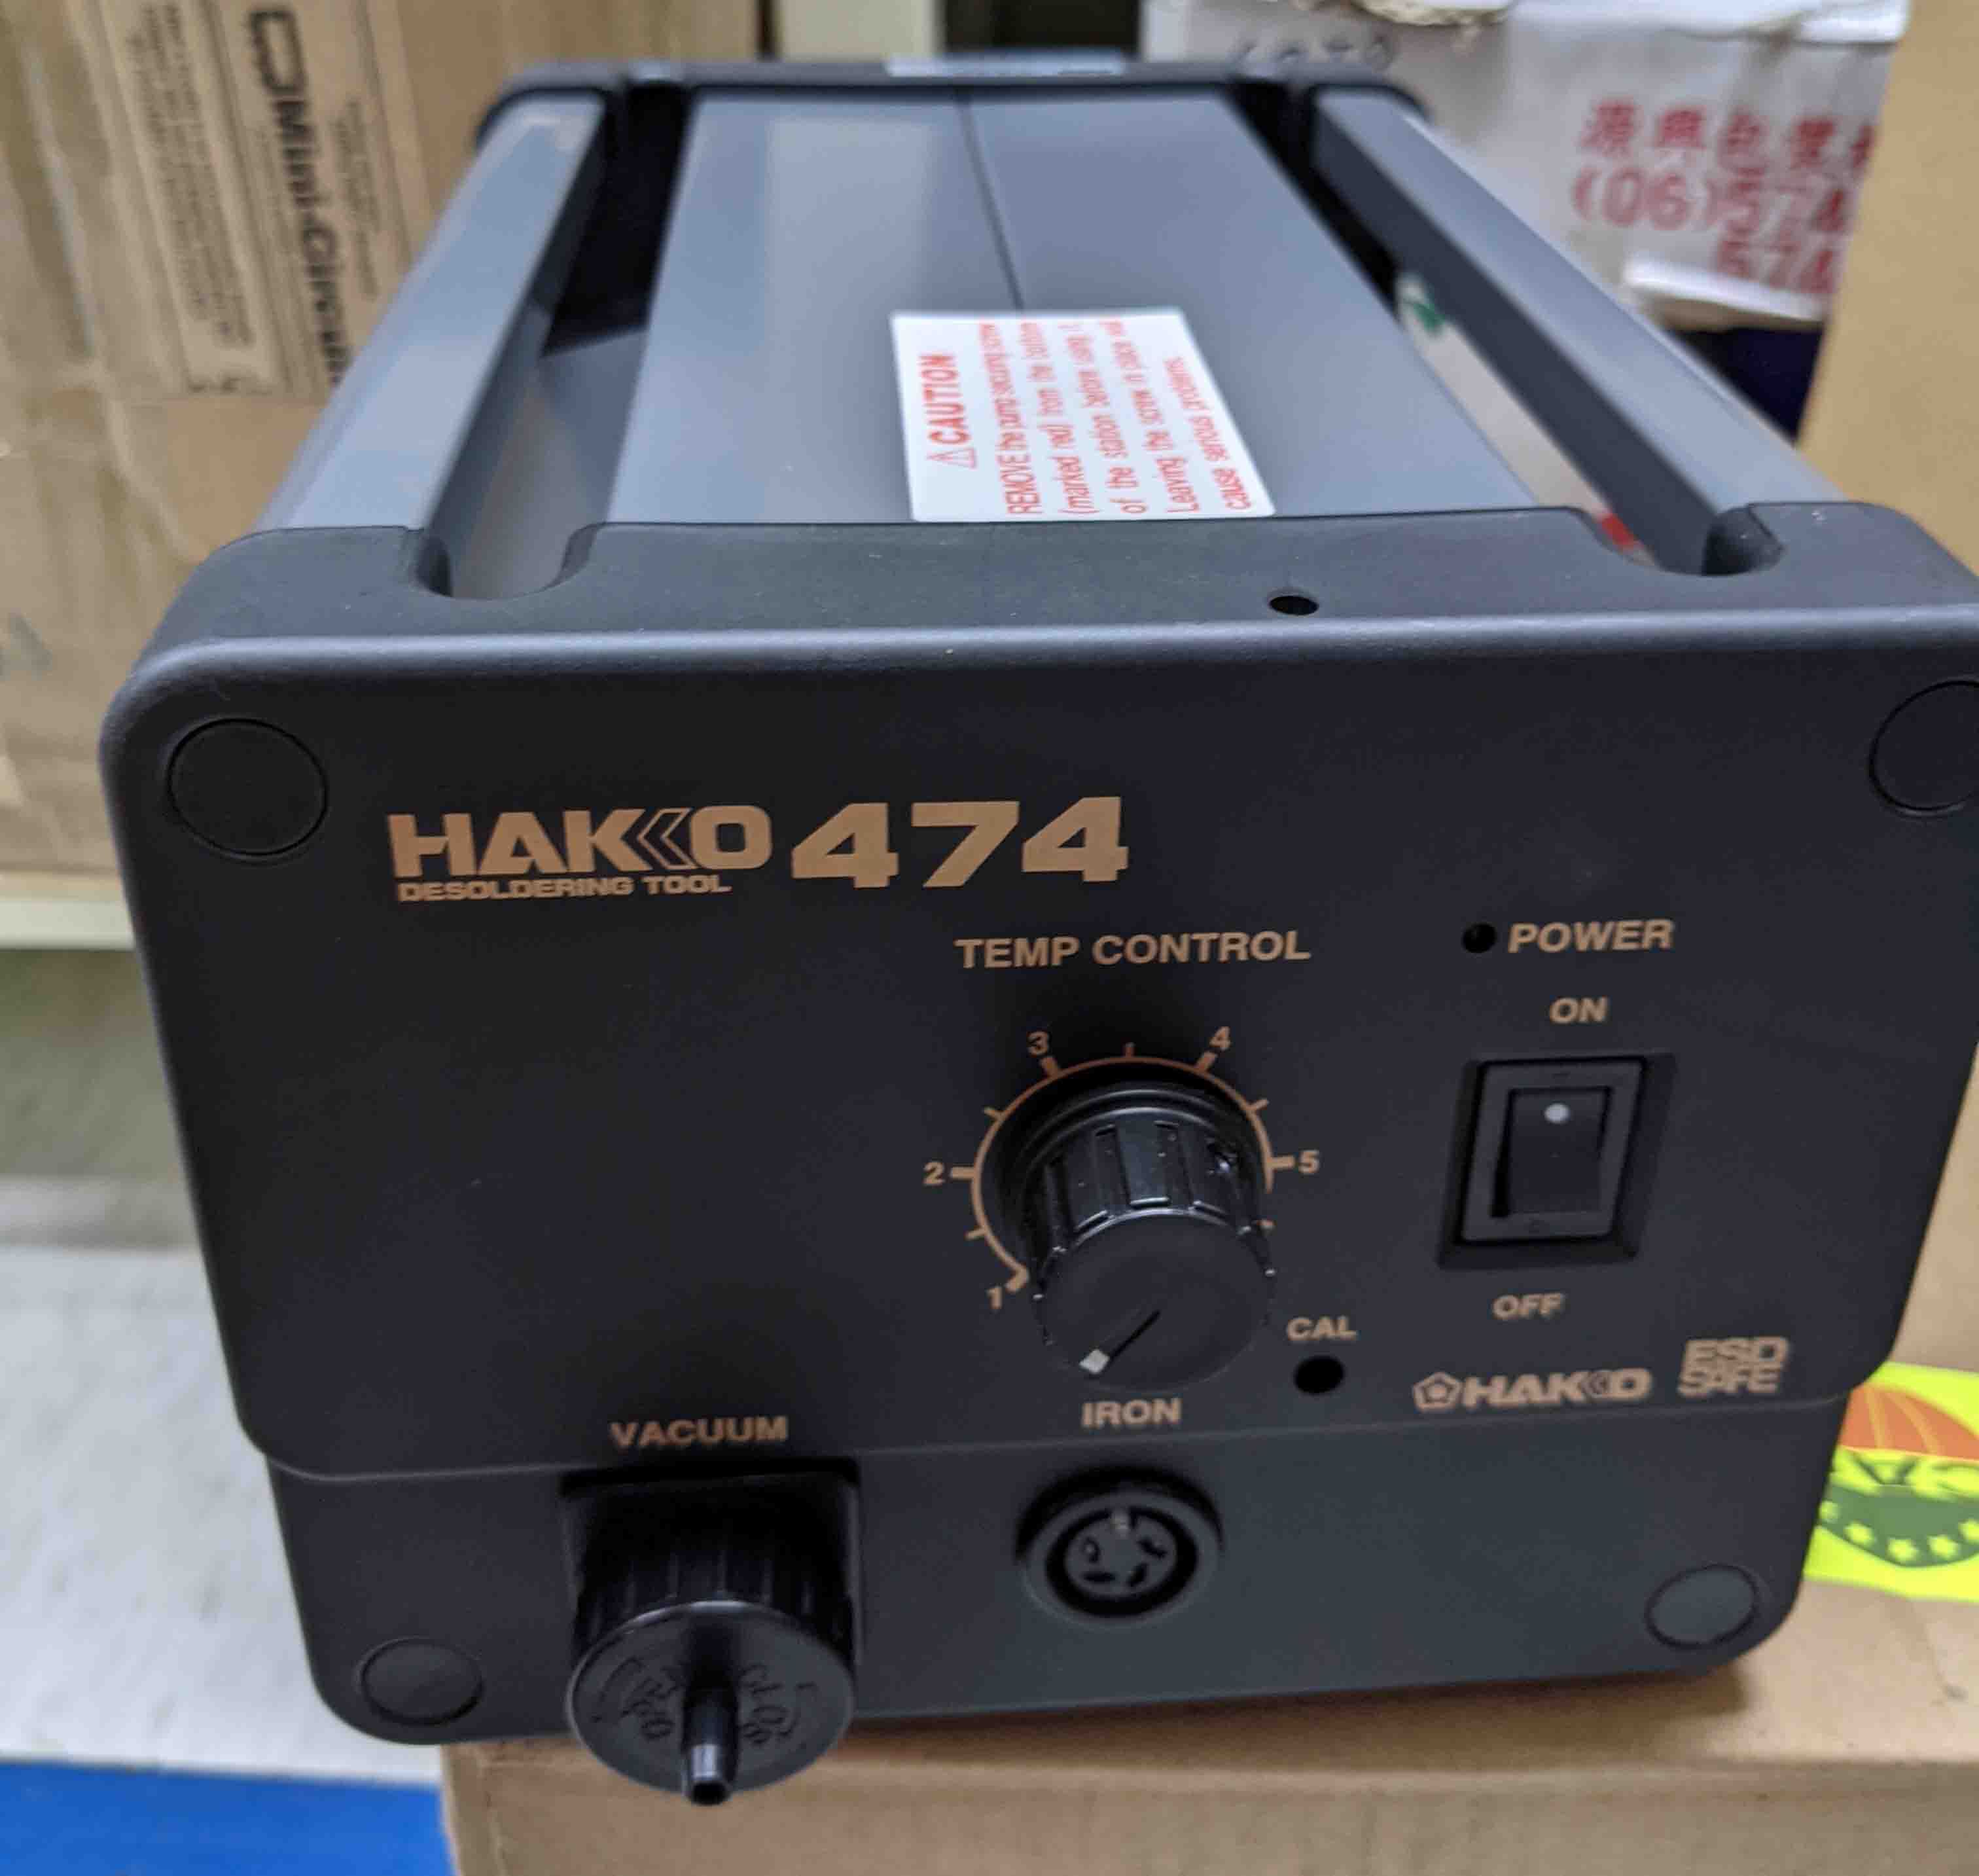 HAKKO 474 Pcb Solder Machine used for sale price #9396378, 2015 